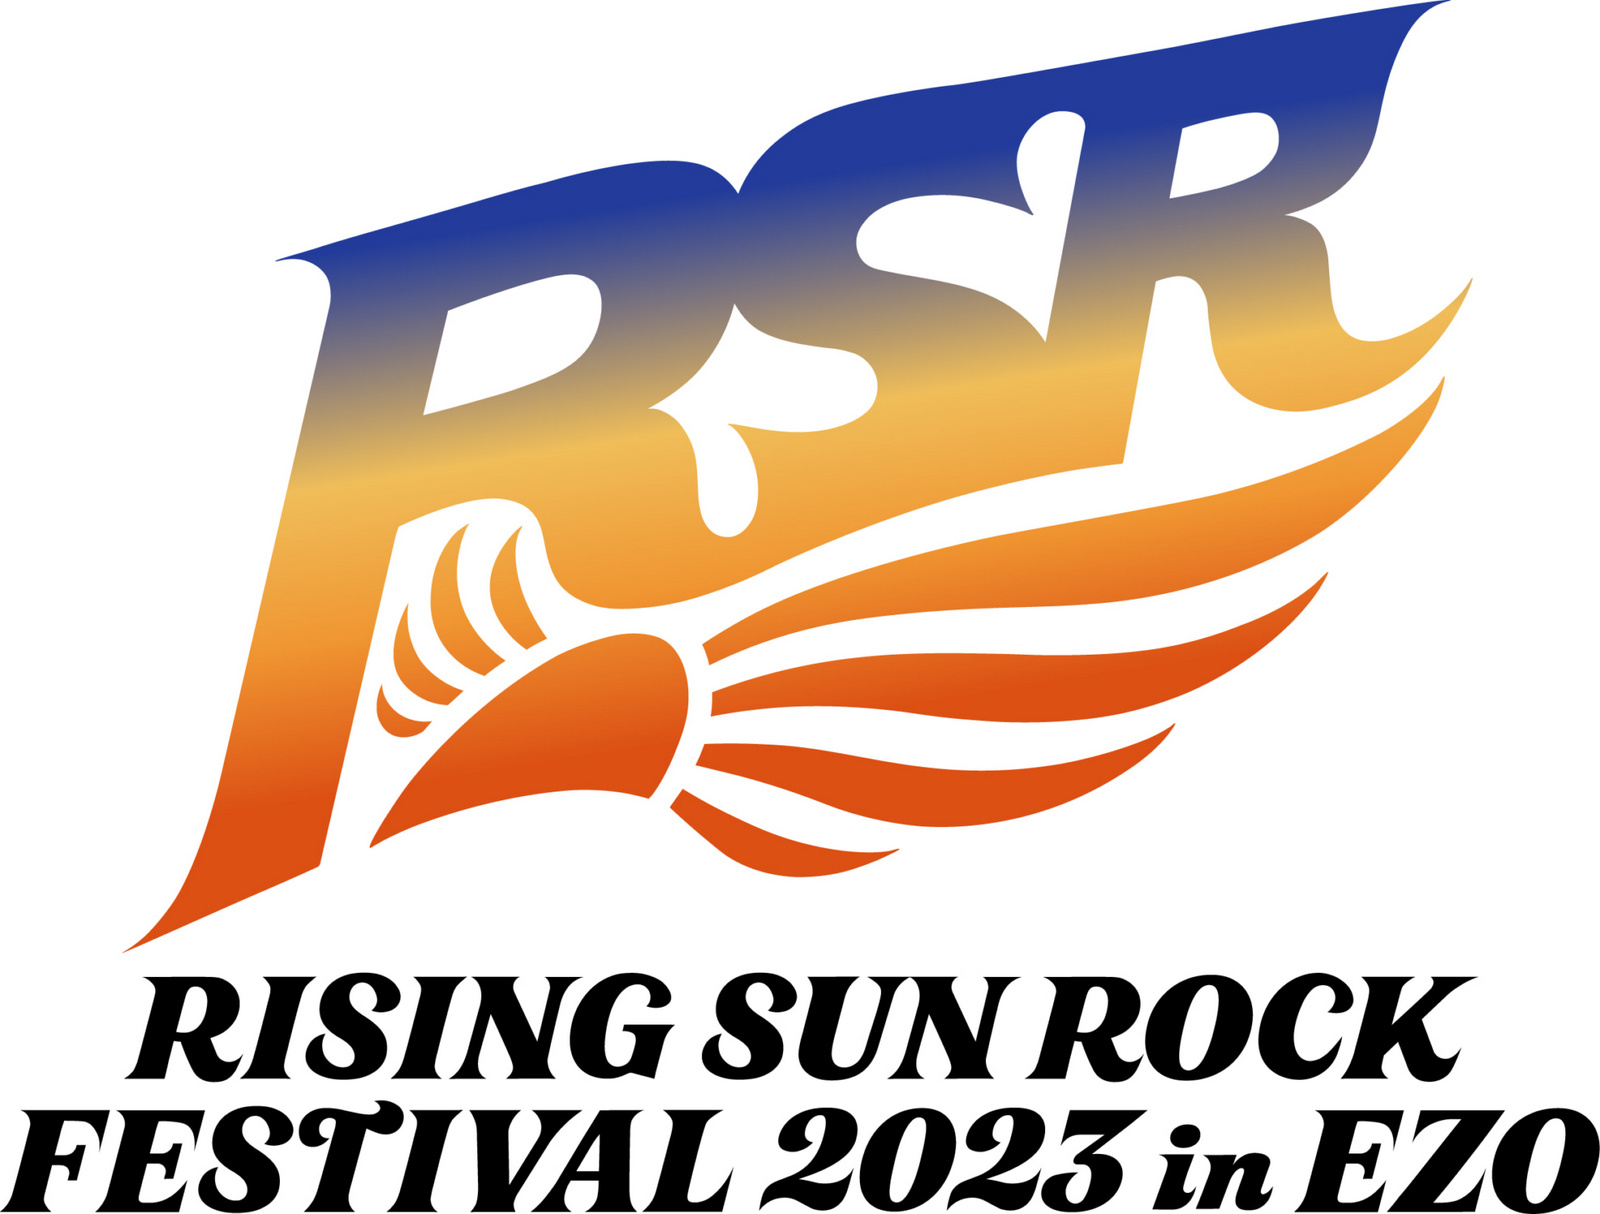 RISING SUN ROCK FESTIVAL 2023 in EZO